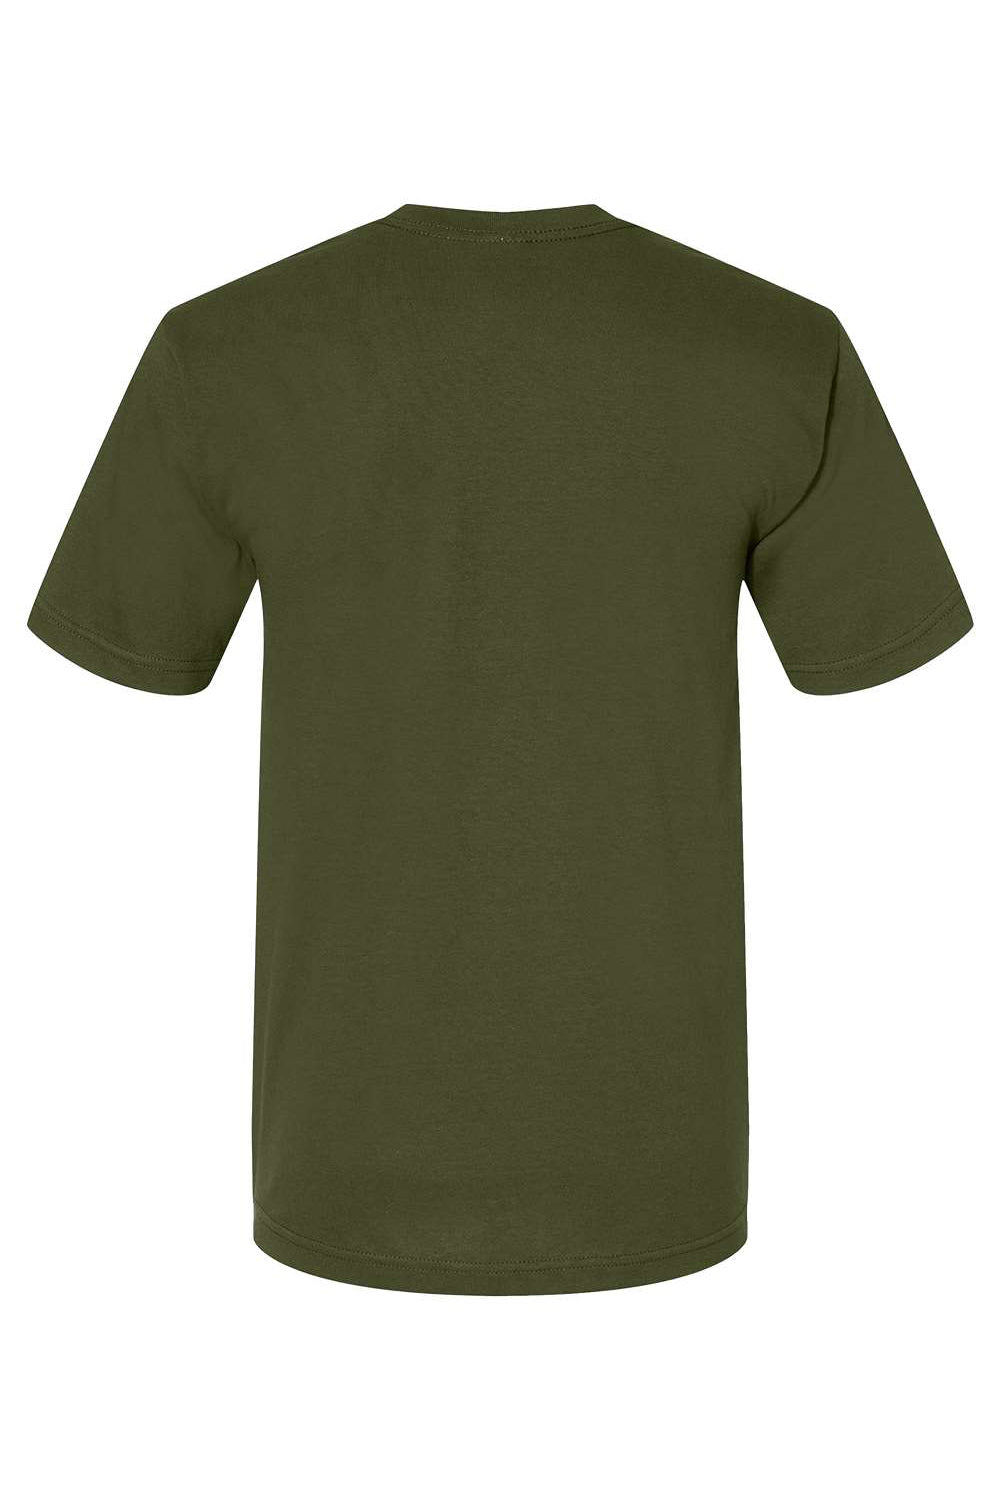 Bayside BA5040 Mens USA Made Short Sleeve Crewneck T-Shirt Olive Green Flat Back